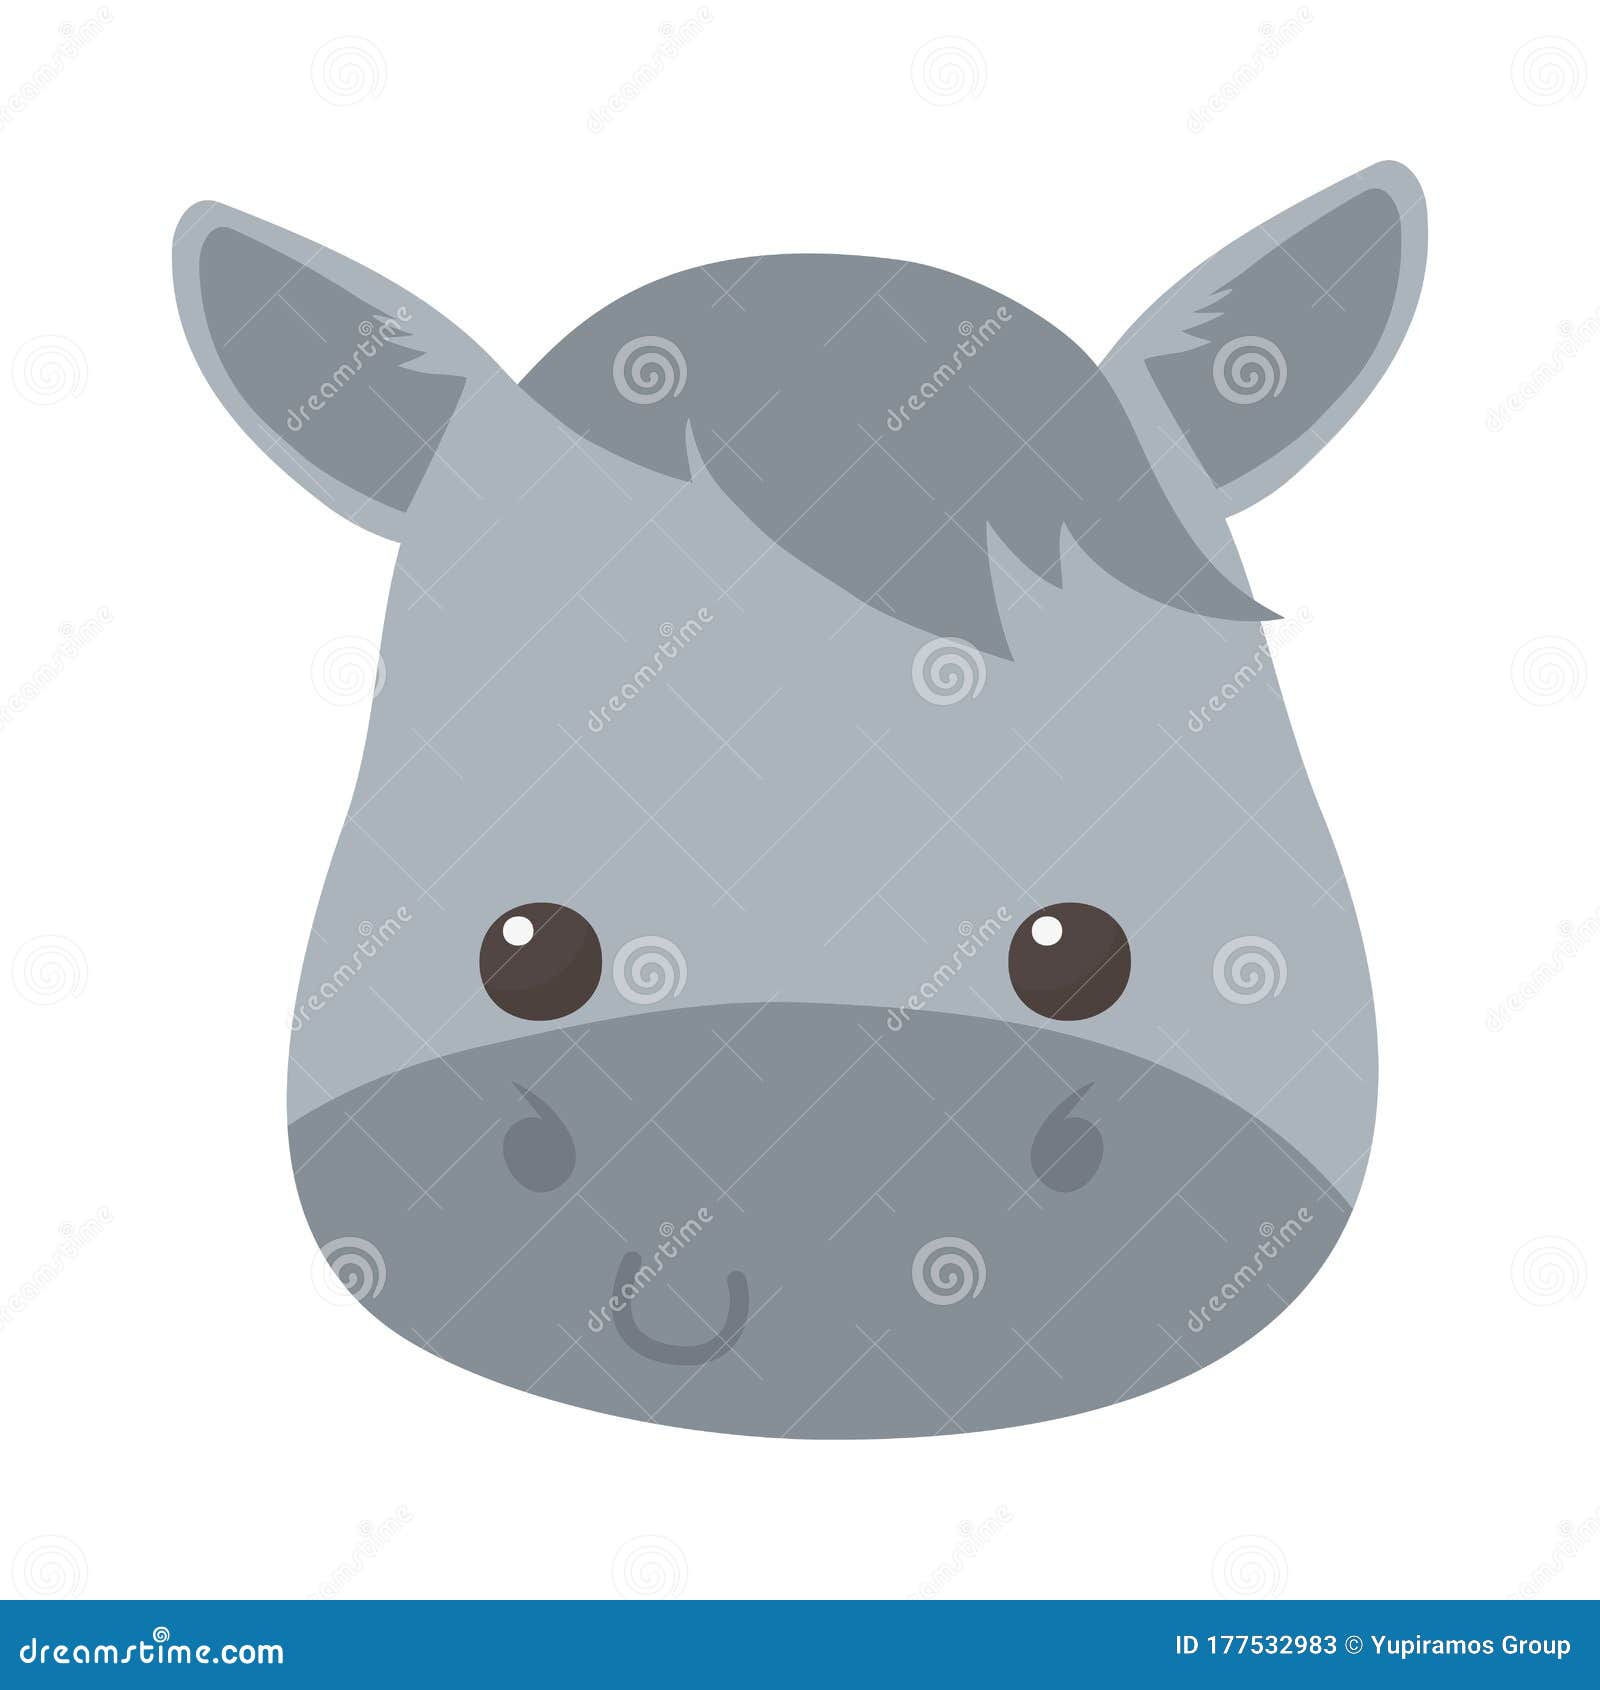 Cute Little Horse Face Animal Cartoon Isolated Design Stock Vector -  Illustration of wild, happy: 177532983